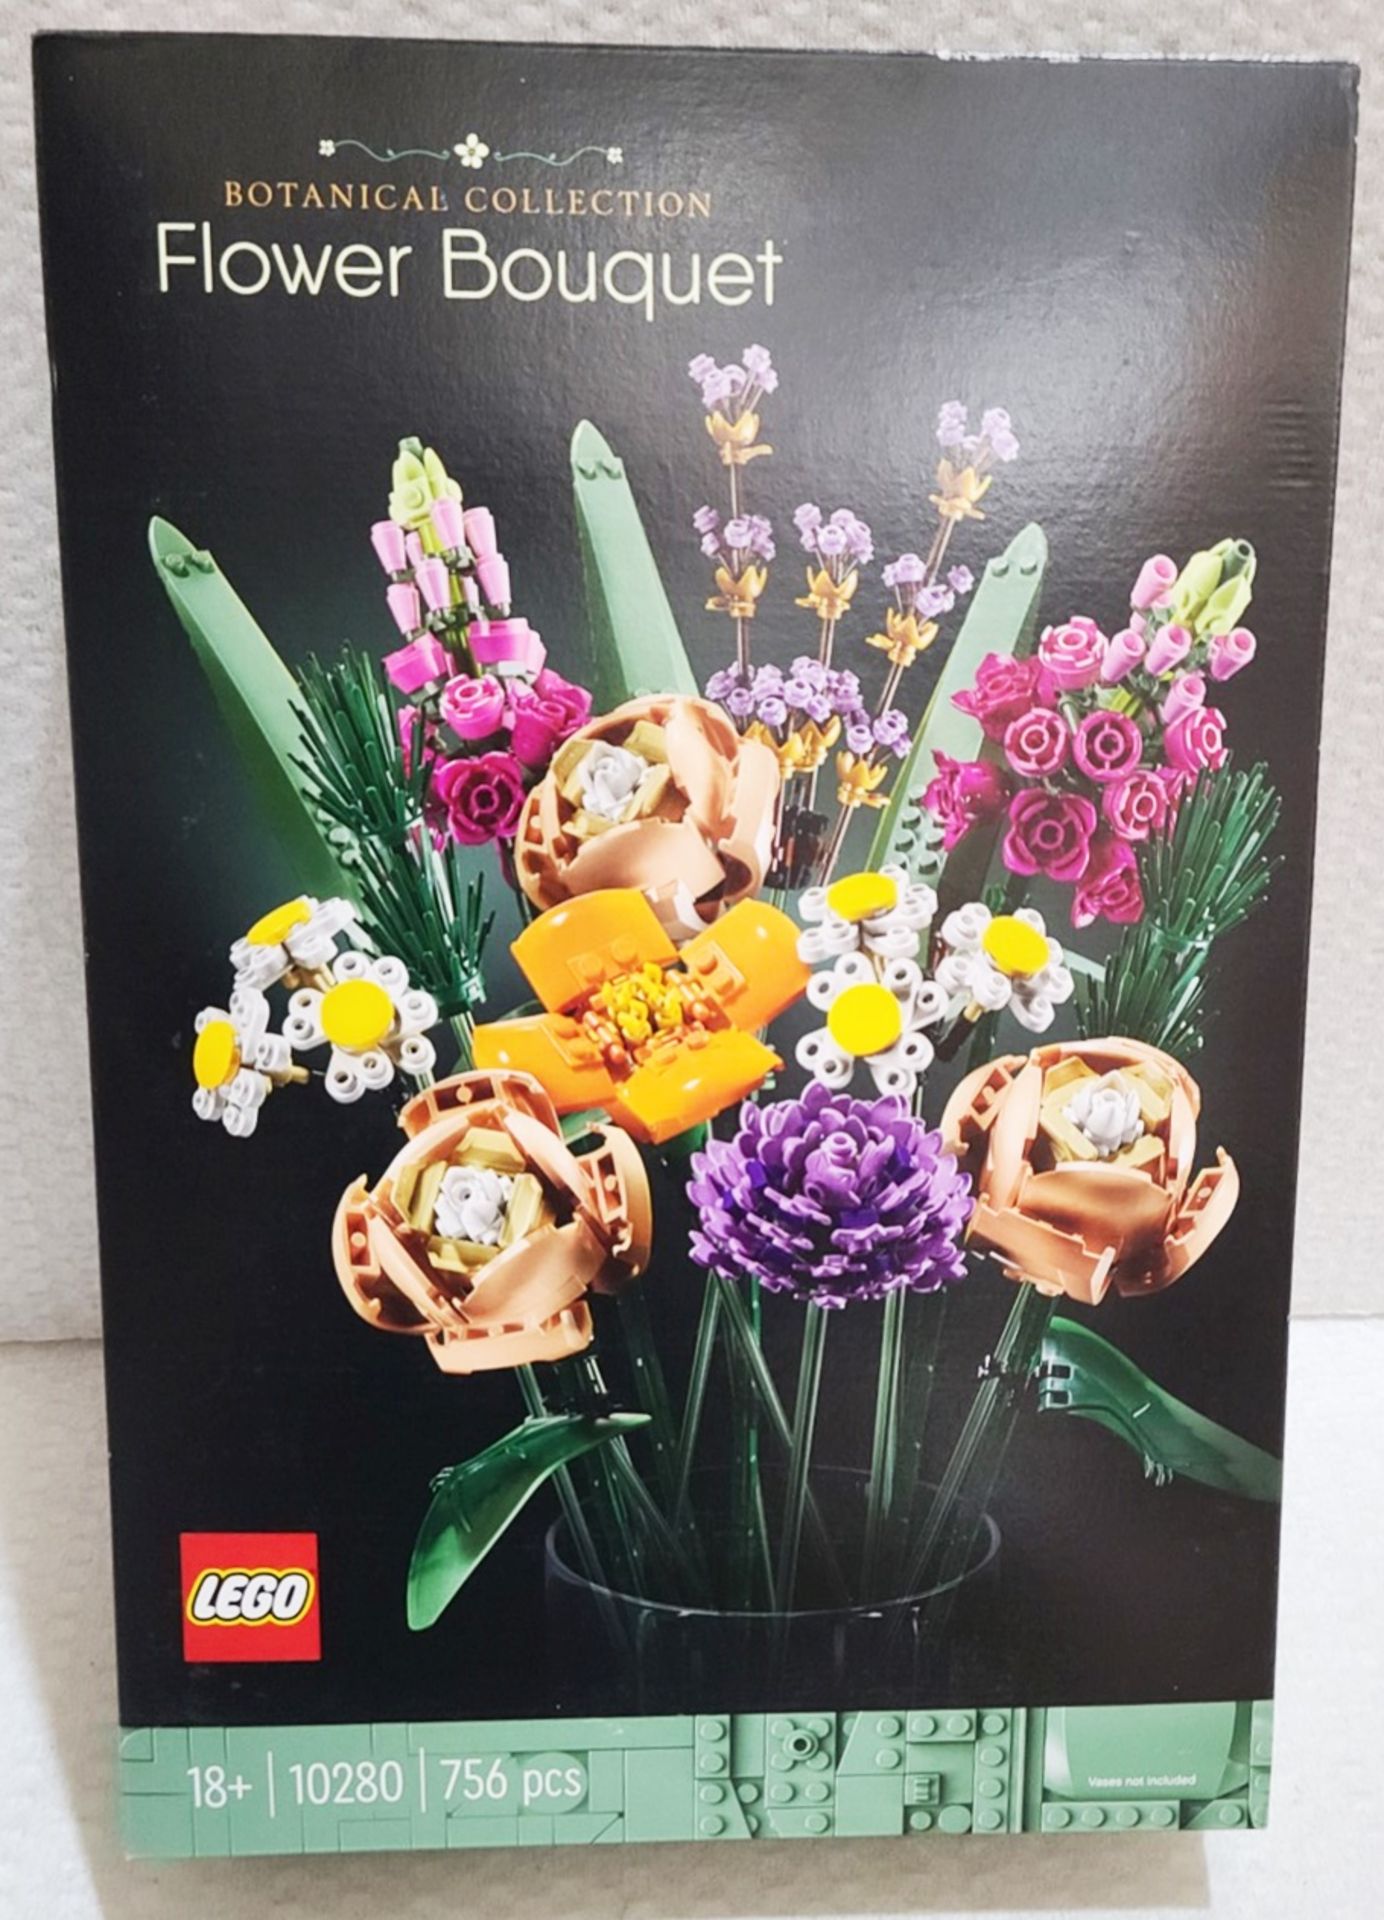 1 x LEGO Creator Expert Flower Bouquet Set 10280 - Original Price £54.95